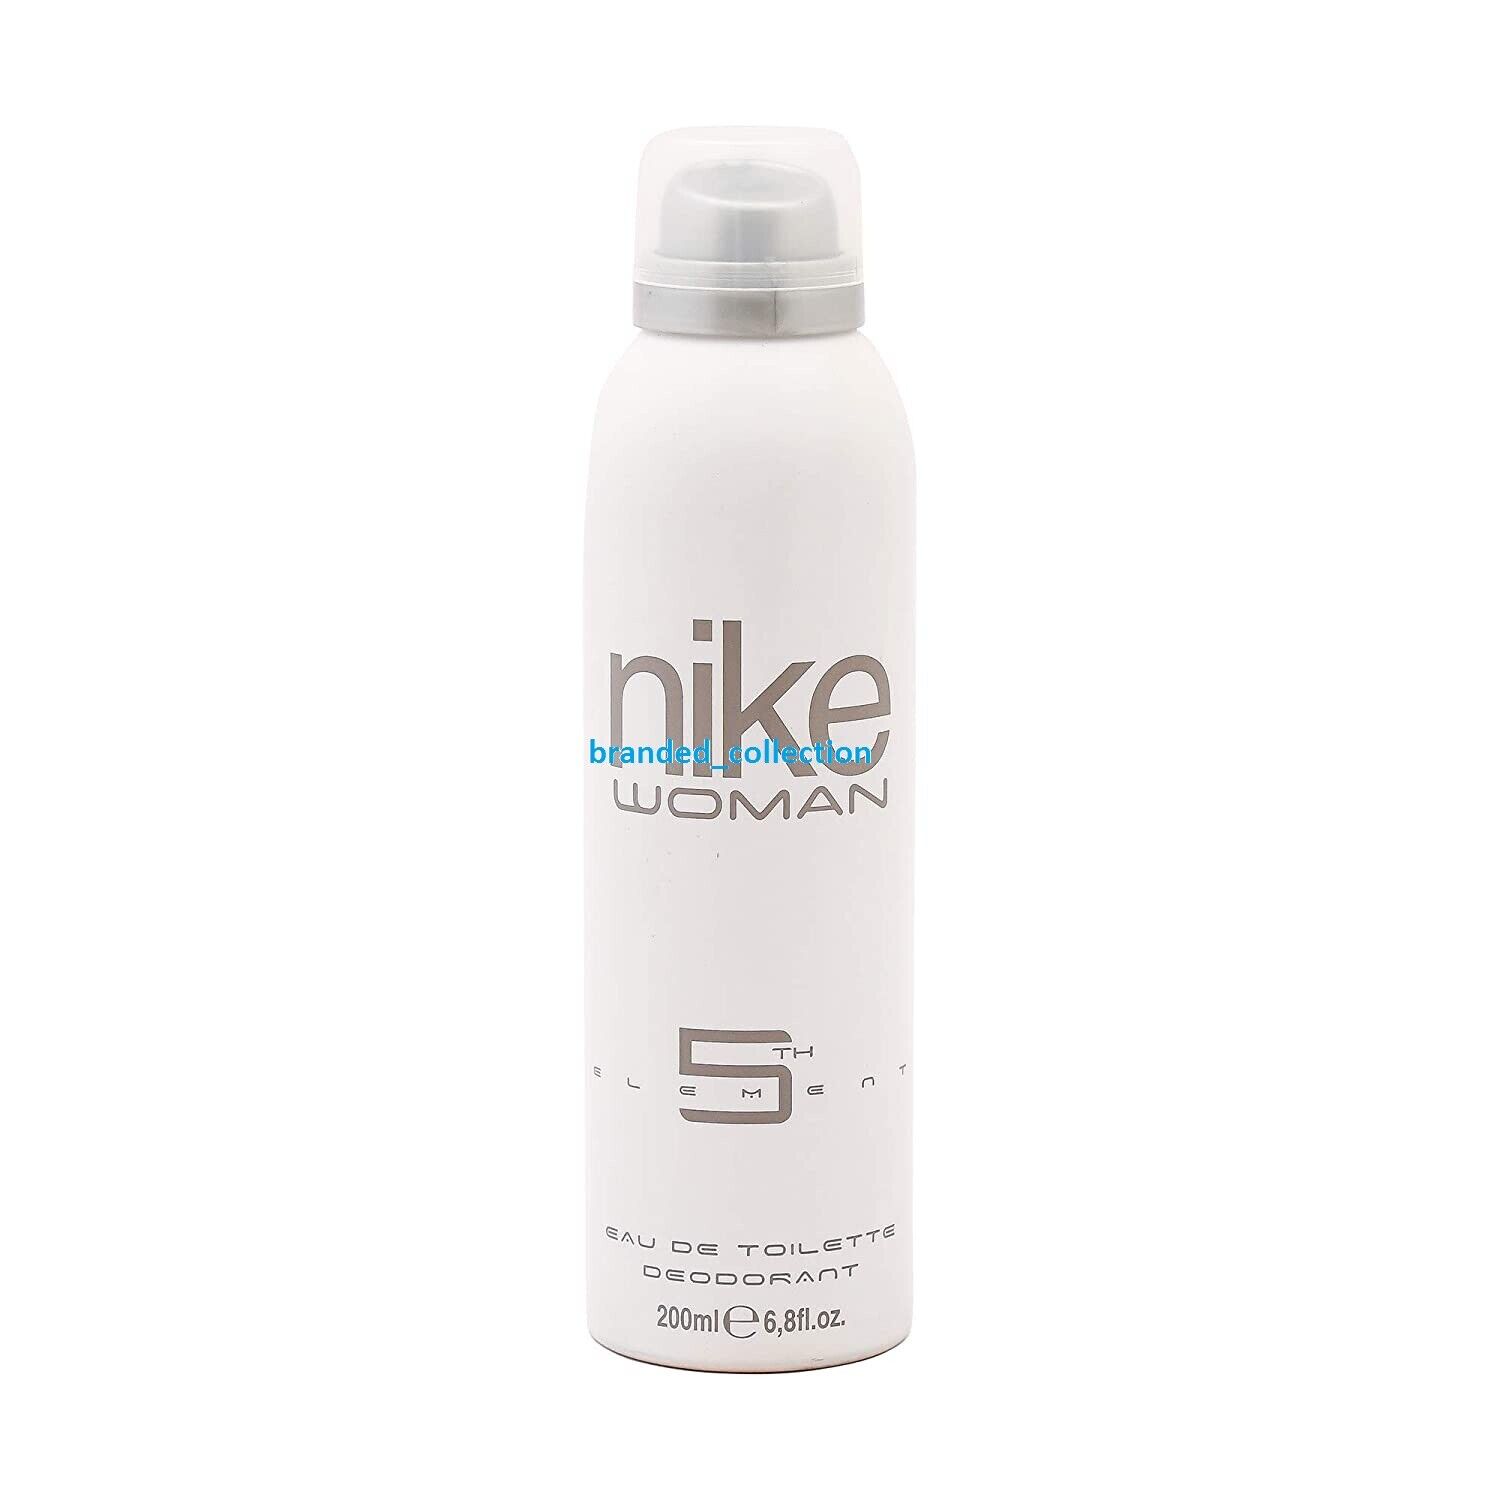 Elástico ponerse nervioso honor Nike Woman 5th Element Deodorant 200 ml | eBay